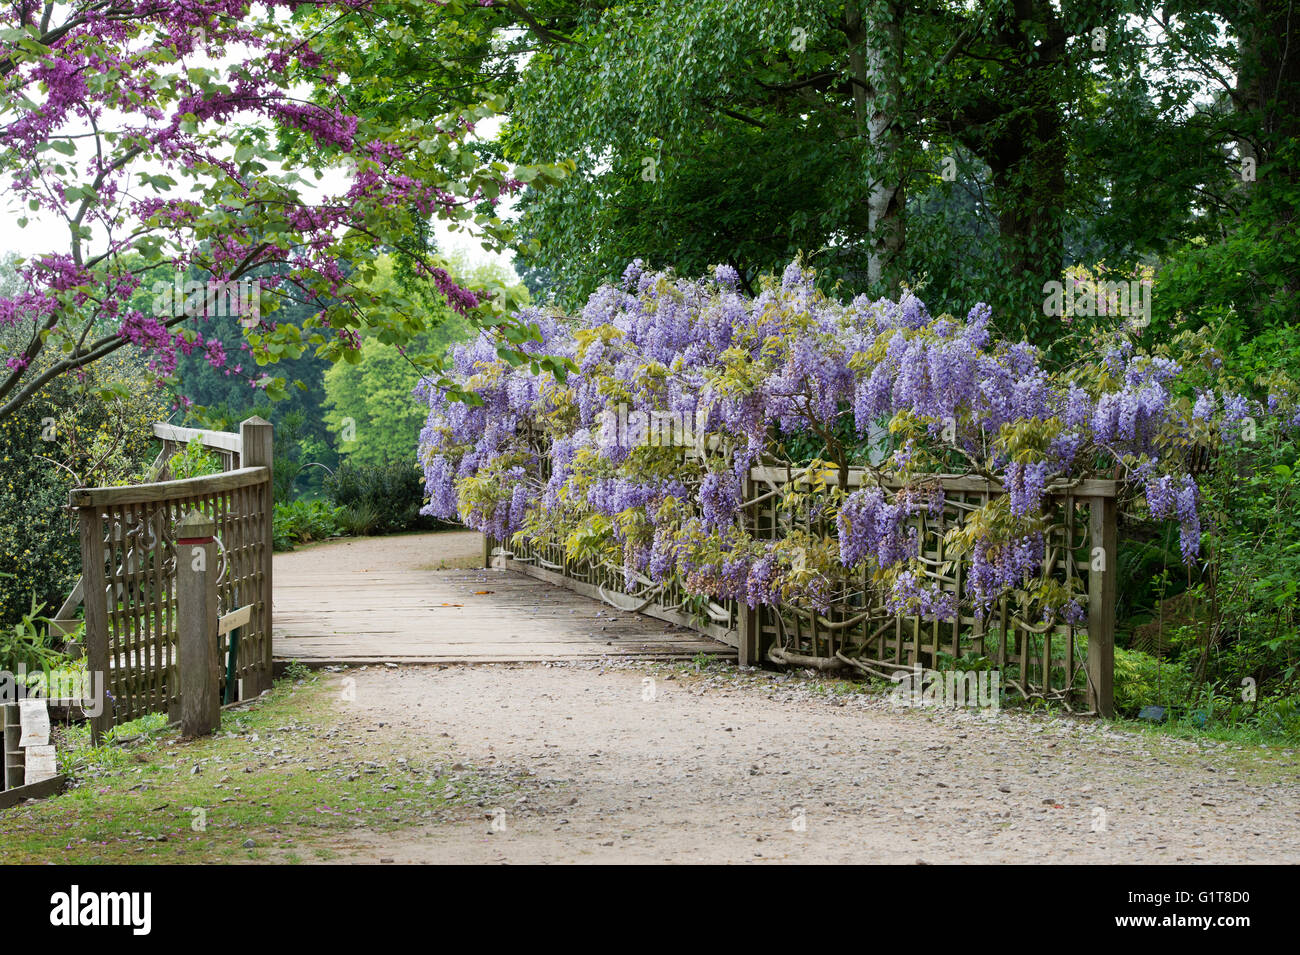 Flowering wisteria sinensis prolific over a wooden bridge at RHS Wisley Gardens, Surrey, England Stock Photo